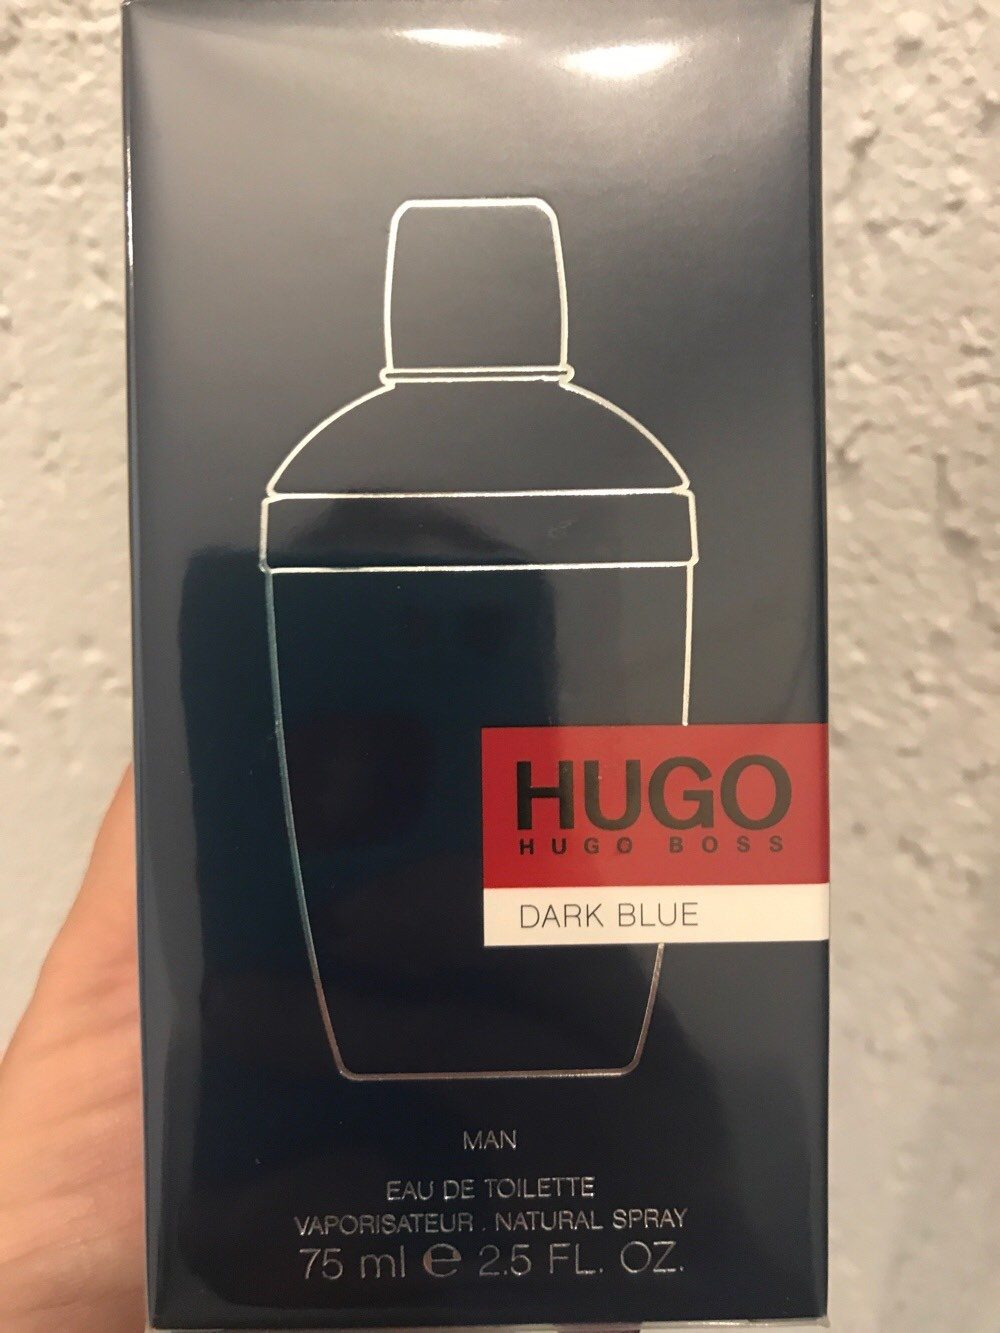 Hugo Boss dark Blue - Product - de